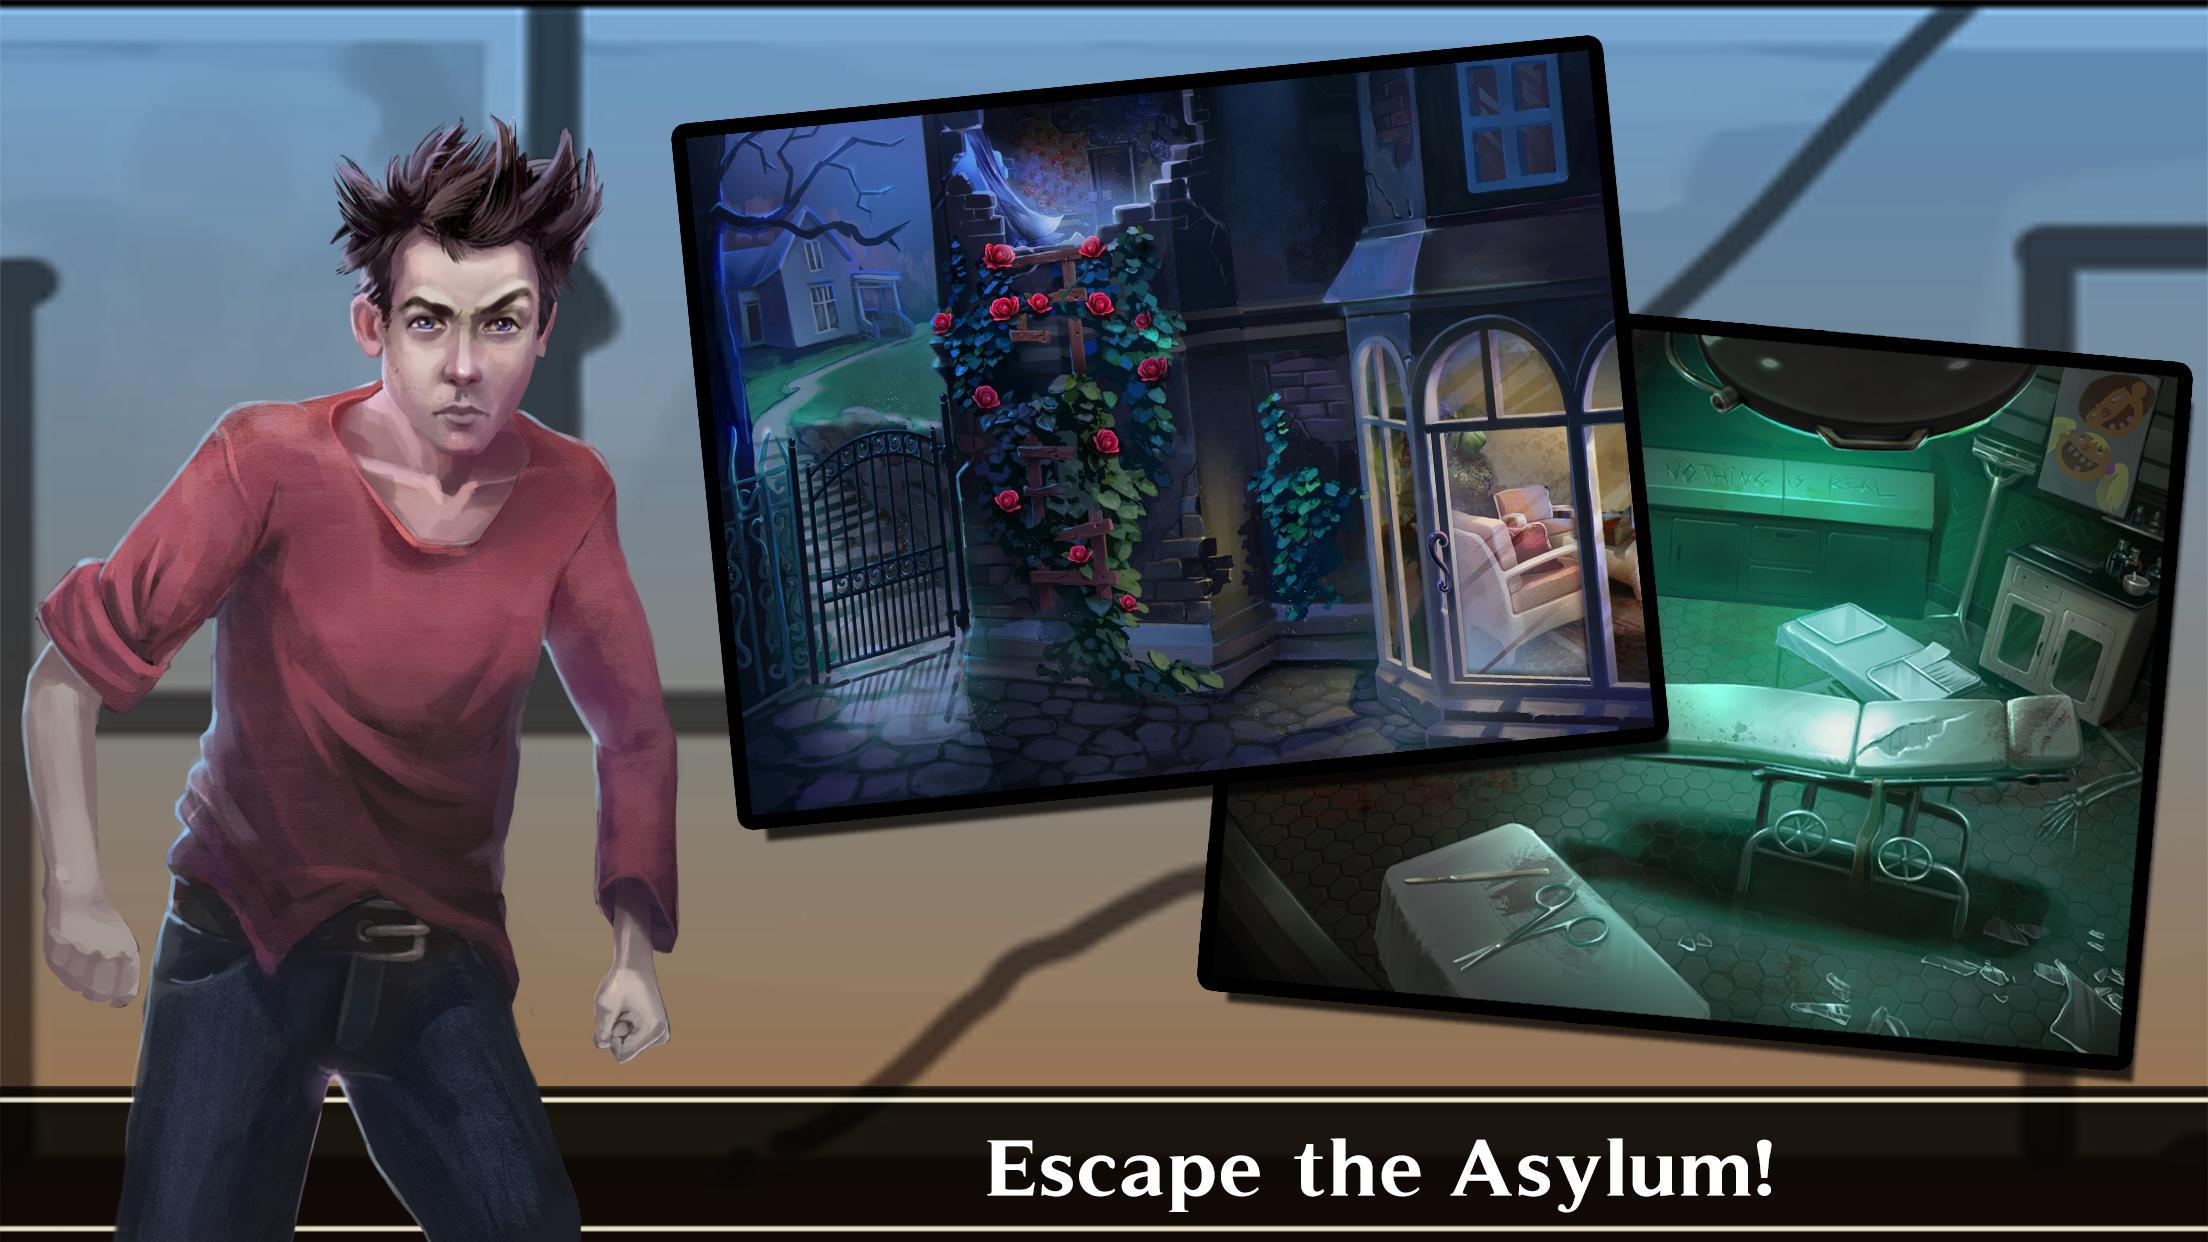 Adventure Escape: Asylum for Android - APK Download